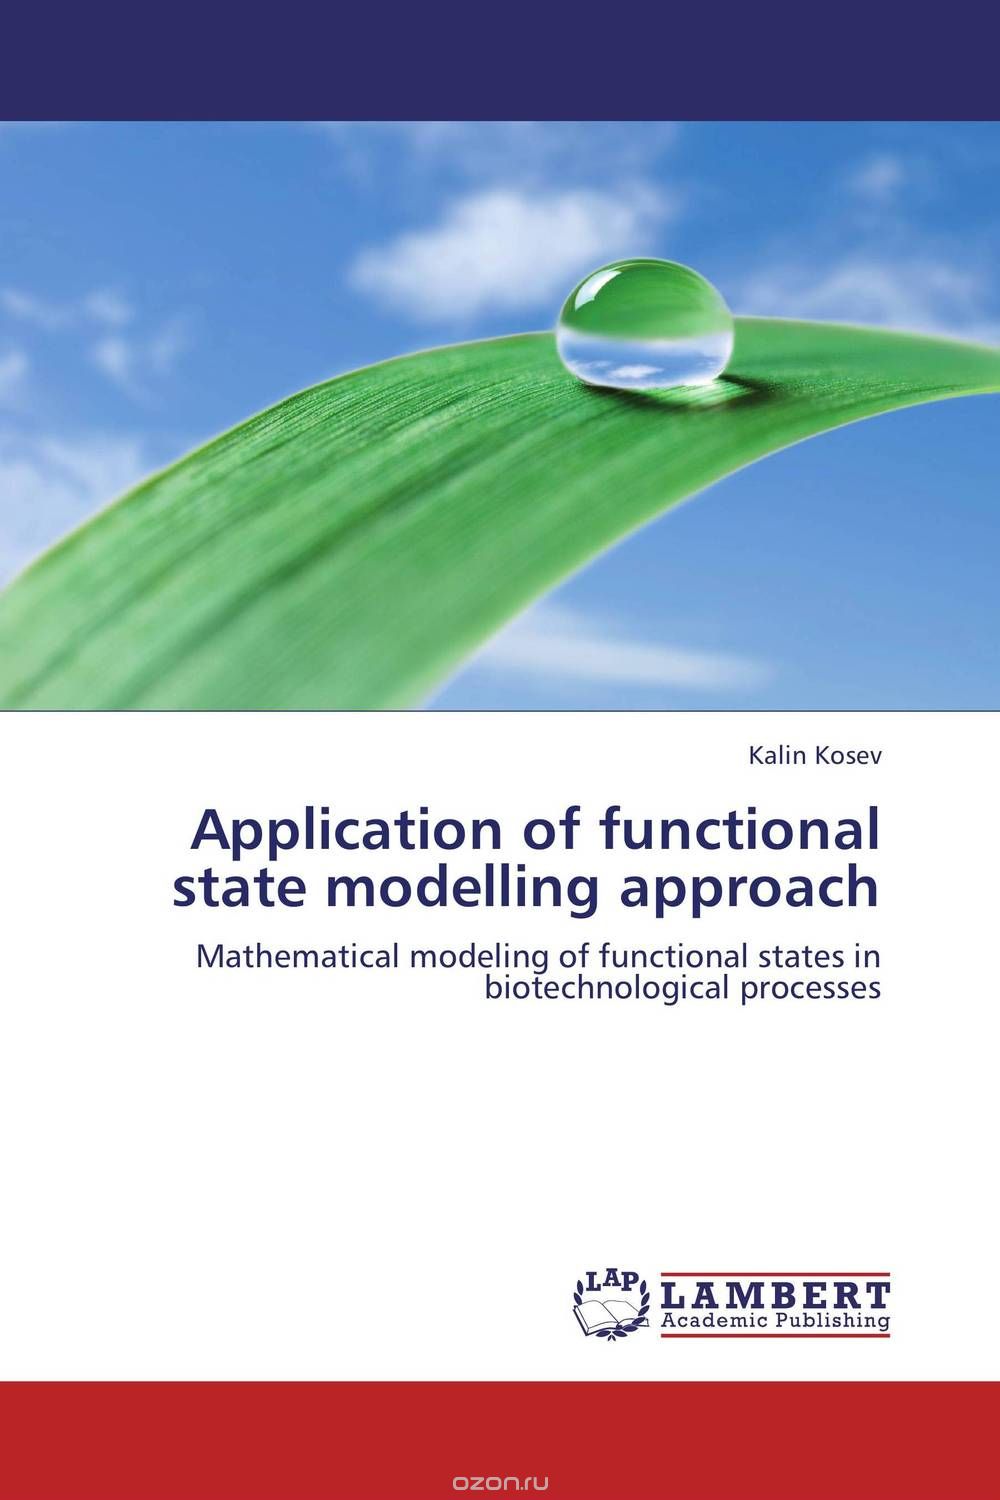 Скачать книгу "Application of functional state modelling approach"